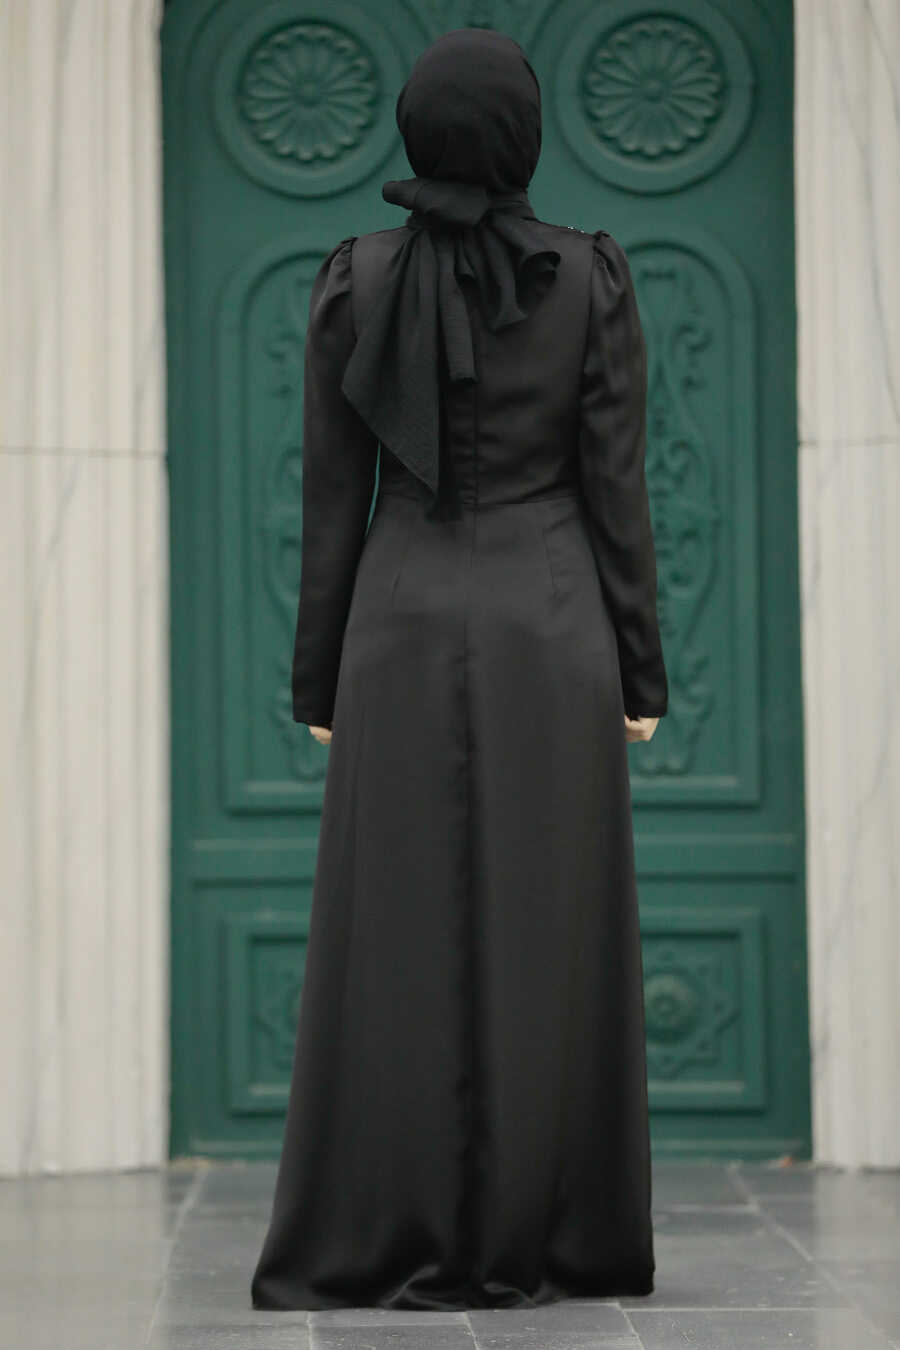  Stylish Black Muslim Bridesmaid Dress 40773S